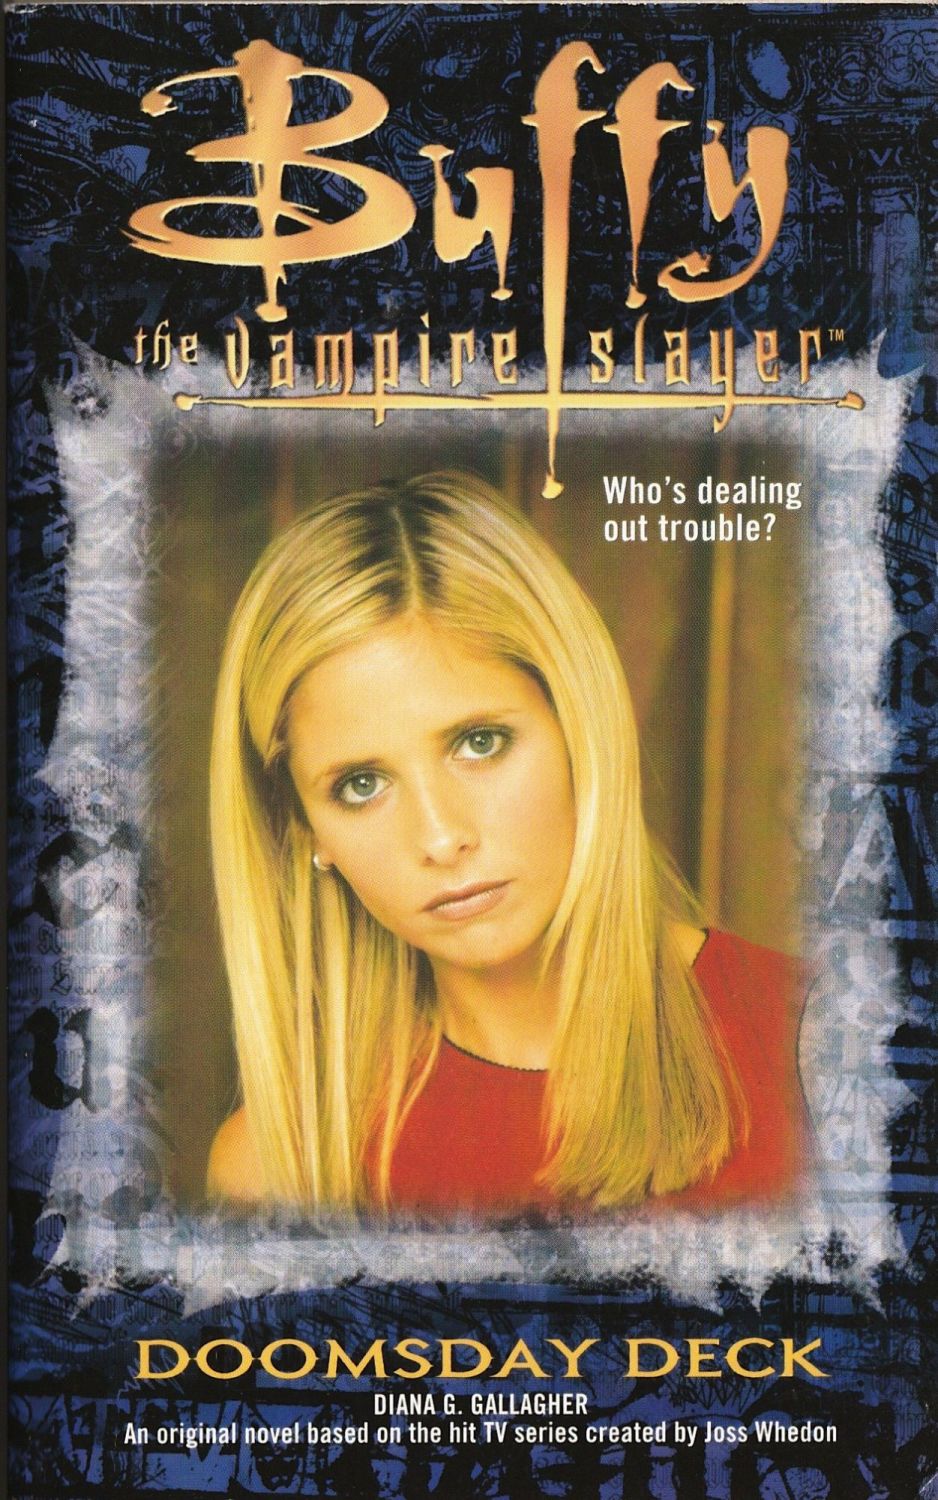 Buffy The Vampire Slayer : Doomsday Deck - Novel - Diana G Gallagher - 2000